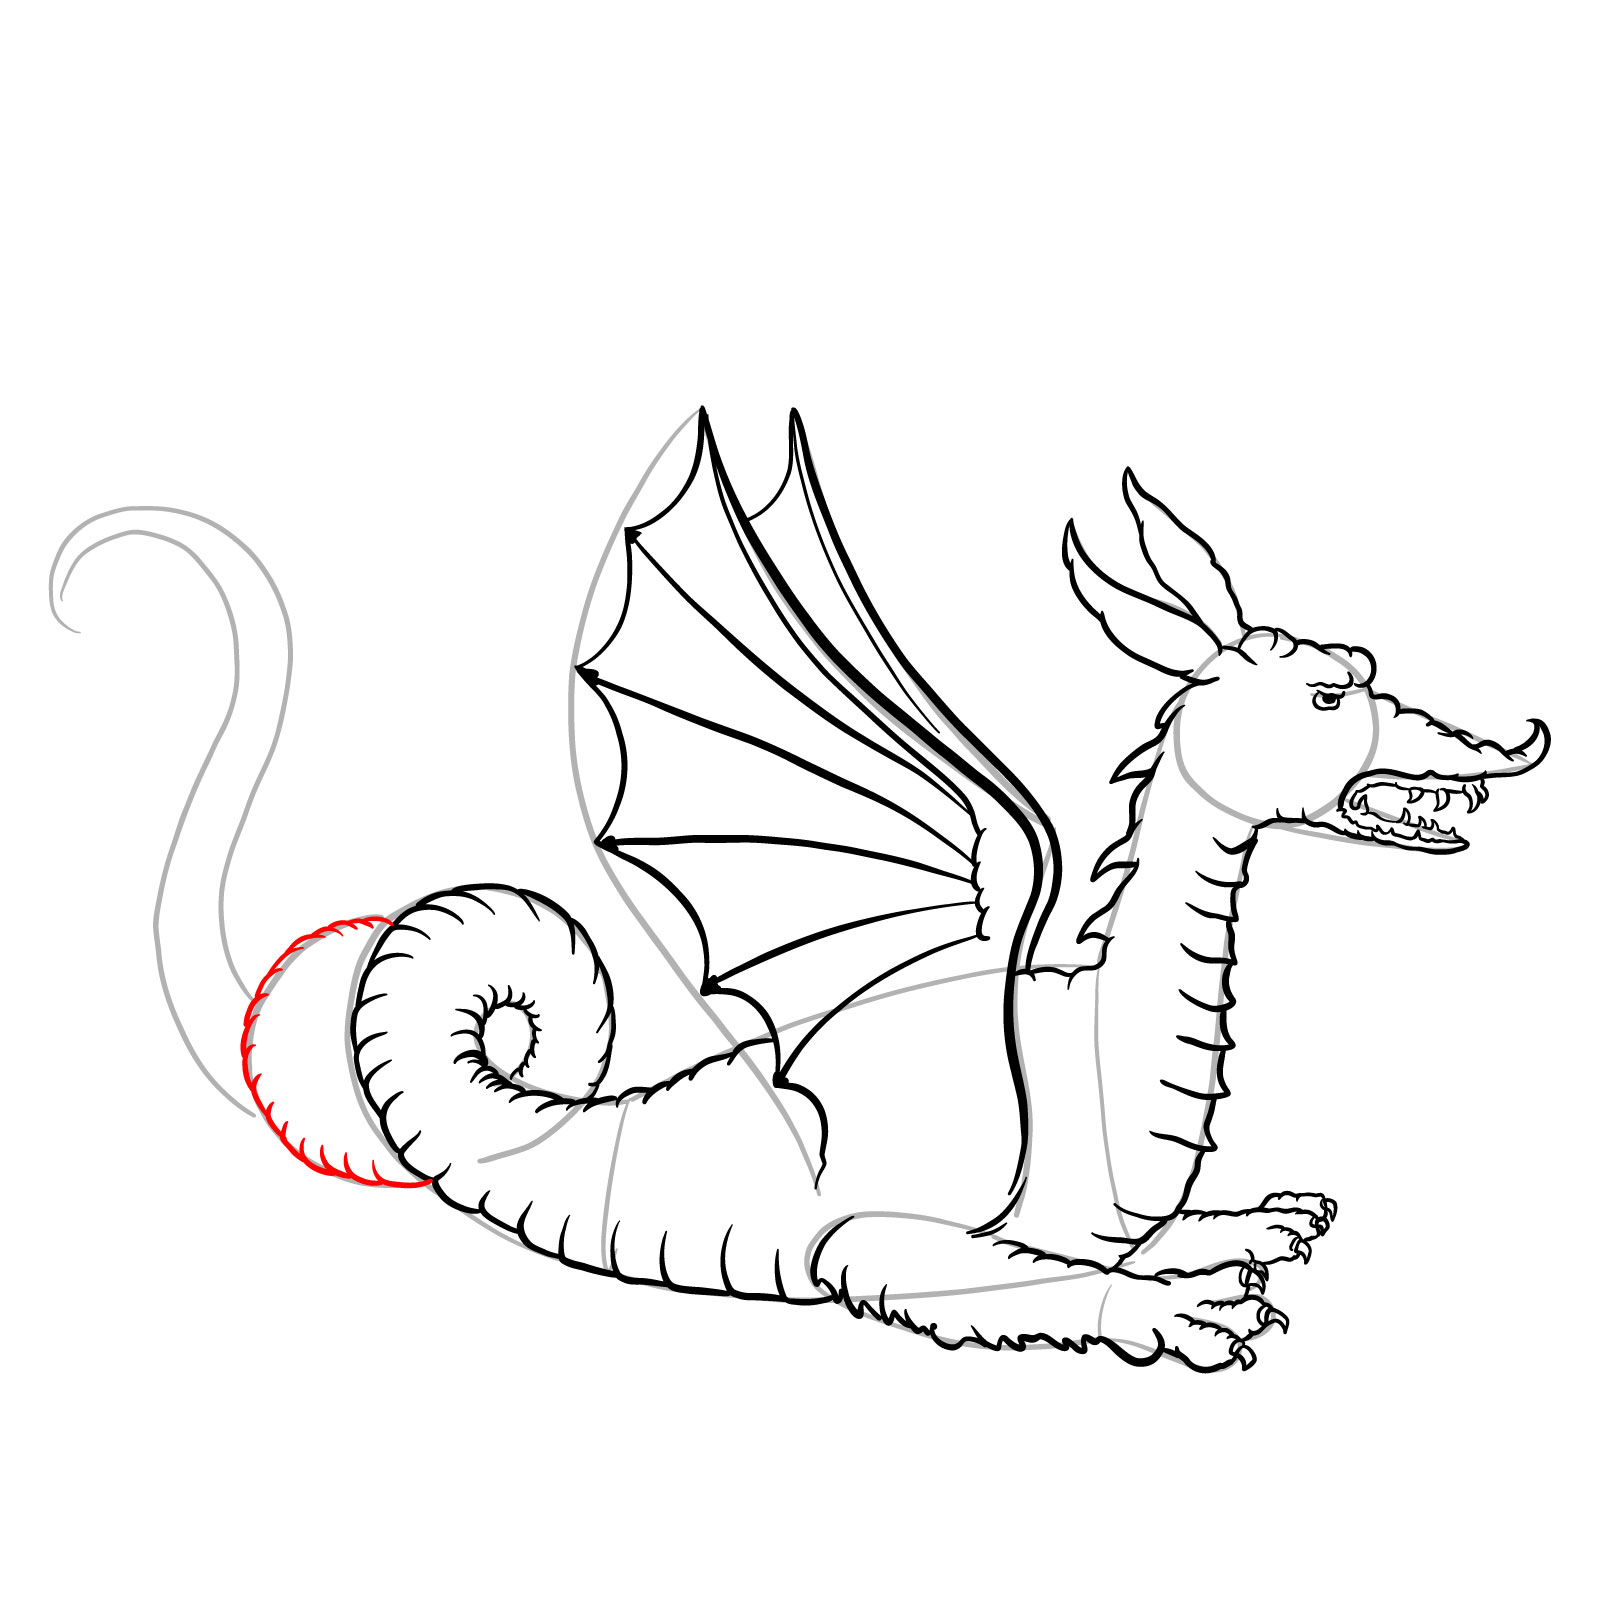 How to draw a Knucker dragon - step 28